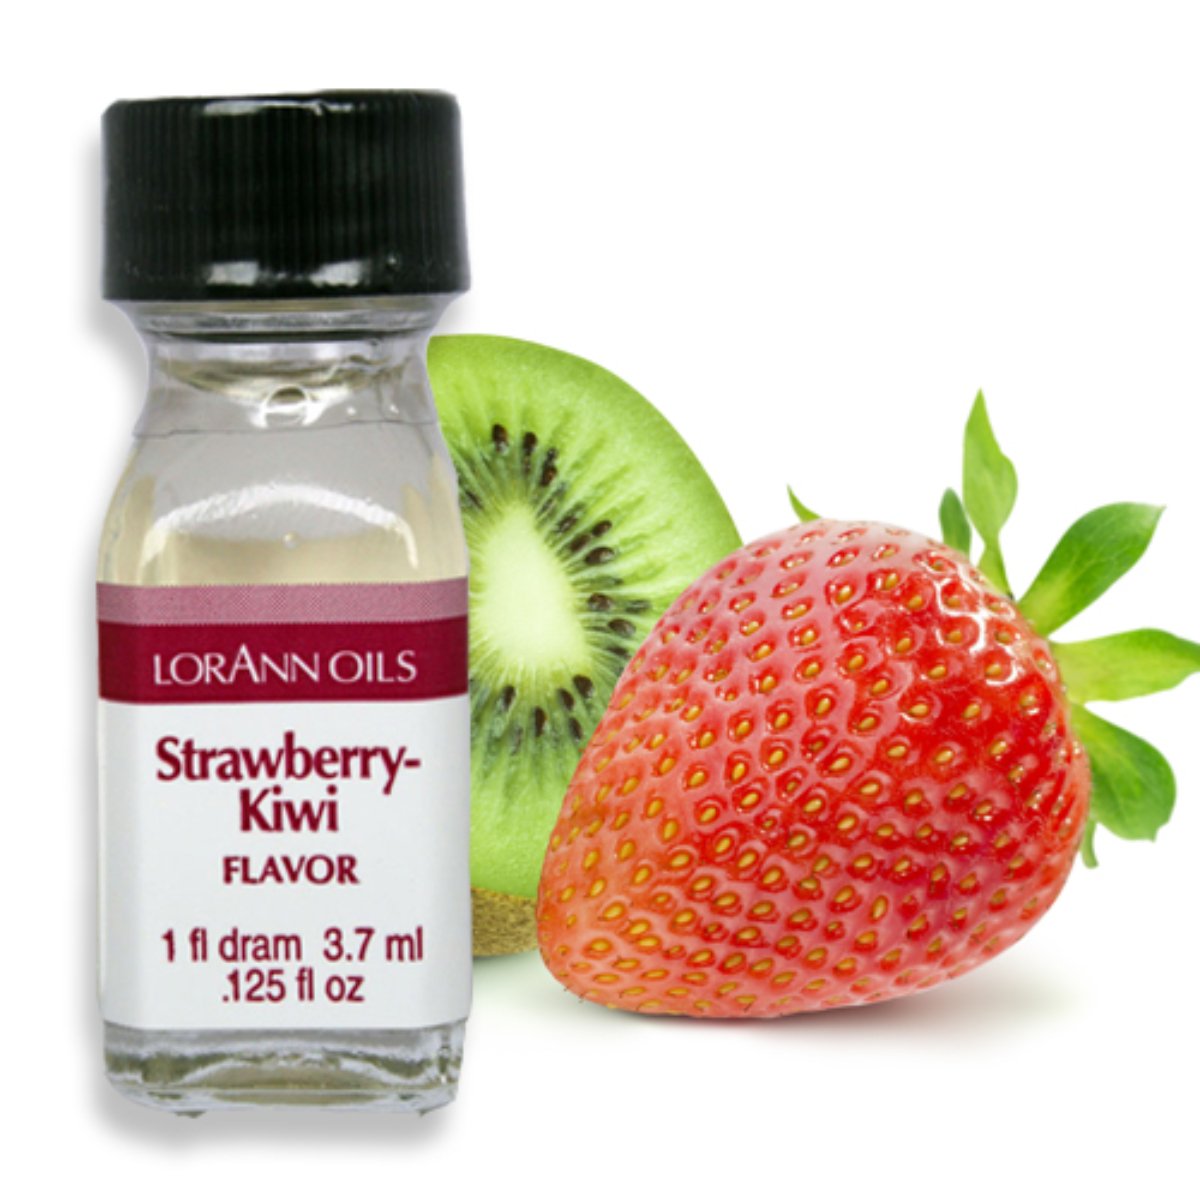 Strawberry Kiwi Flavor 1 Dram - Bake Supply Plus